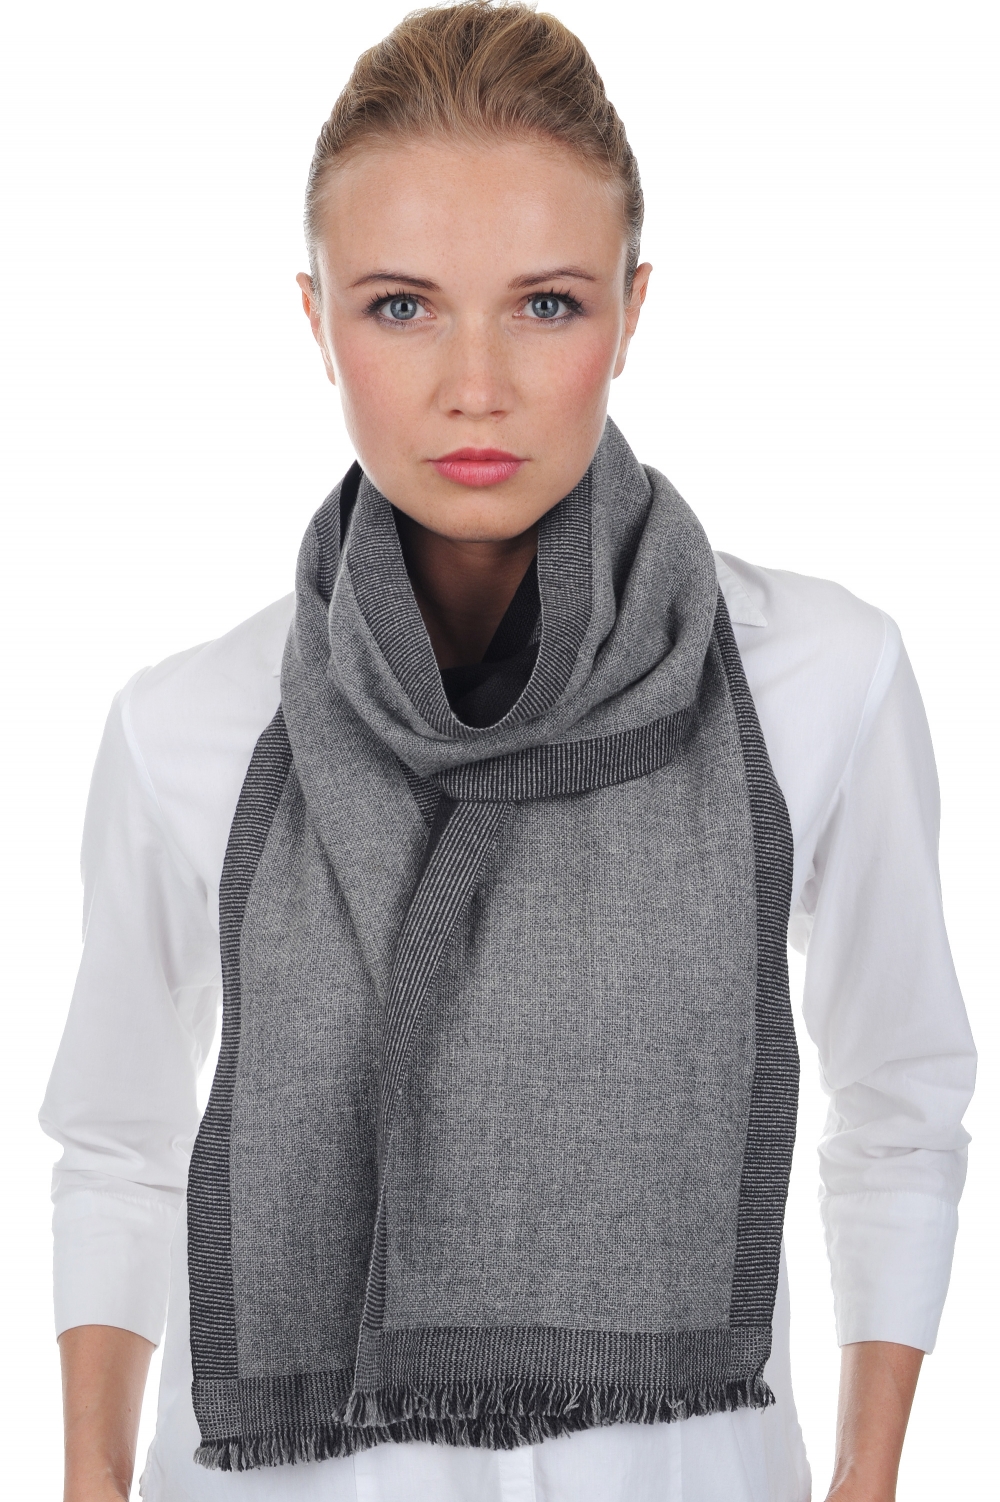 Cashmere accessories scarves mufflers tonnerre grey marl matt charcoal 180 x 24 cm